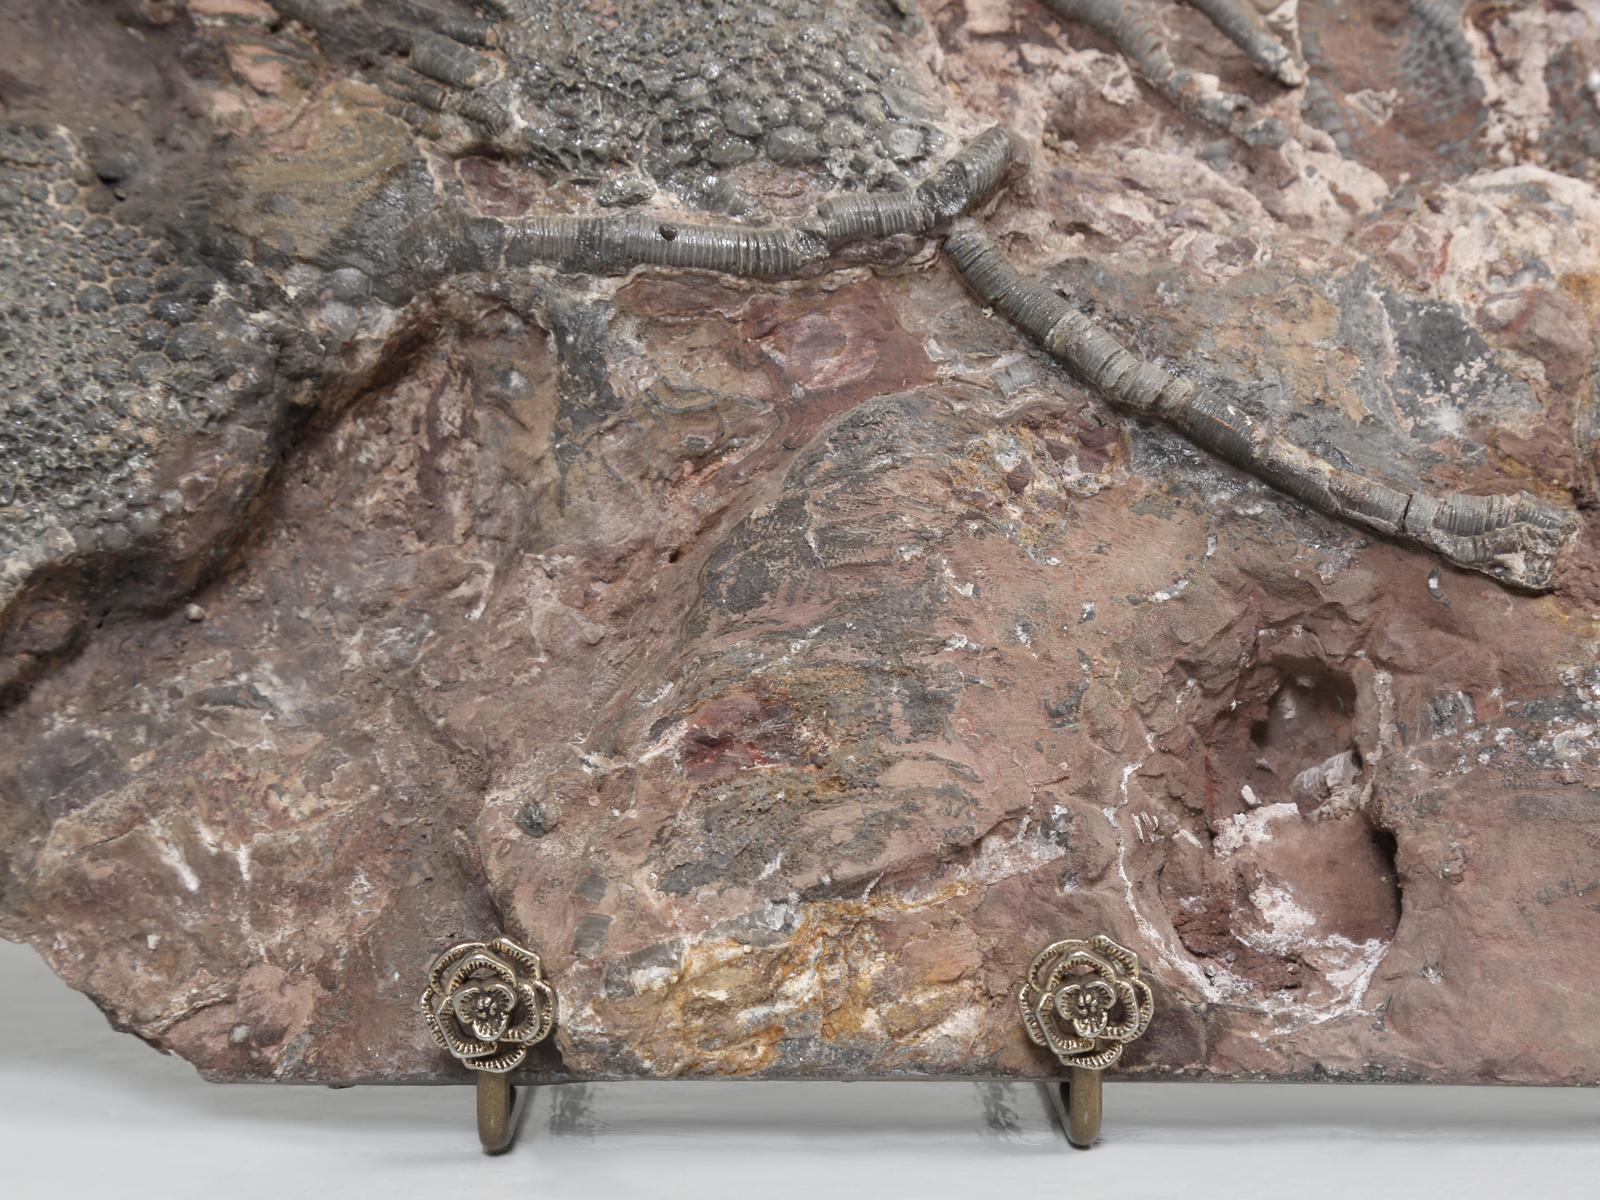 Scyhocrinus Elegans or Crinoid Fossil from Morocco 450 Million Years Old 2